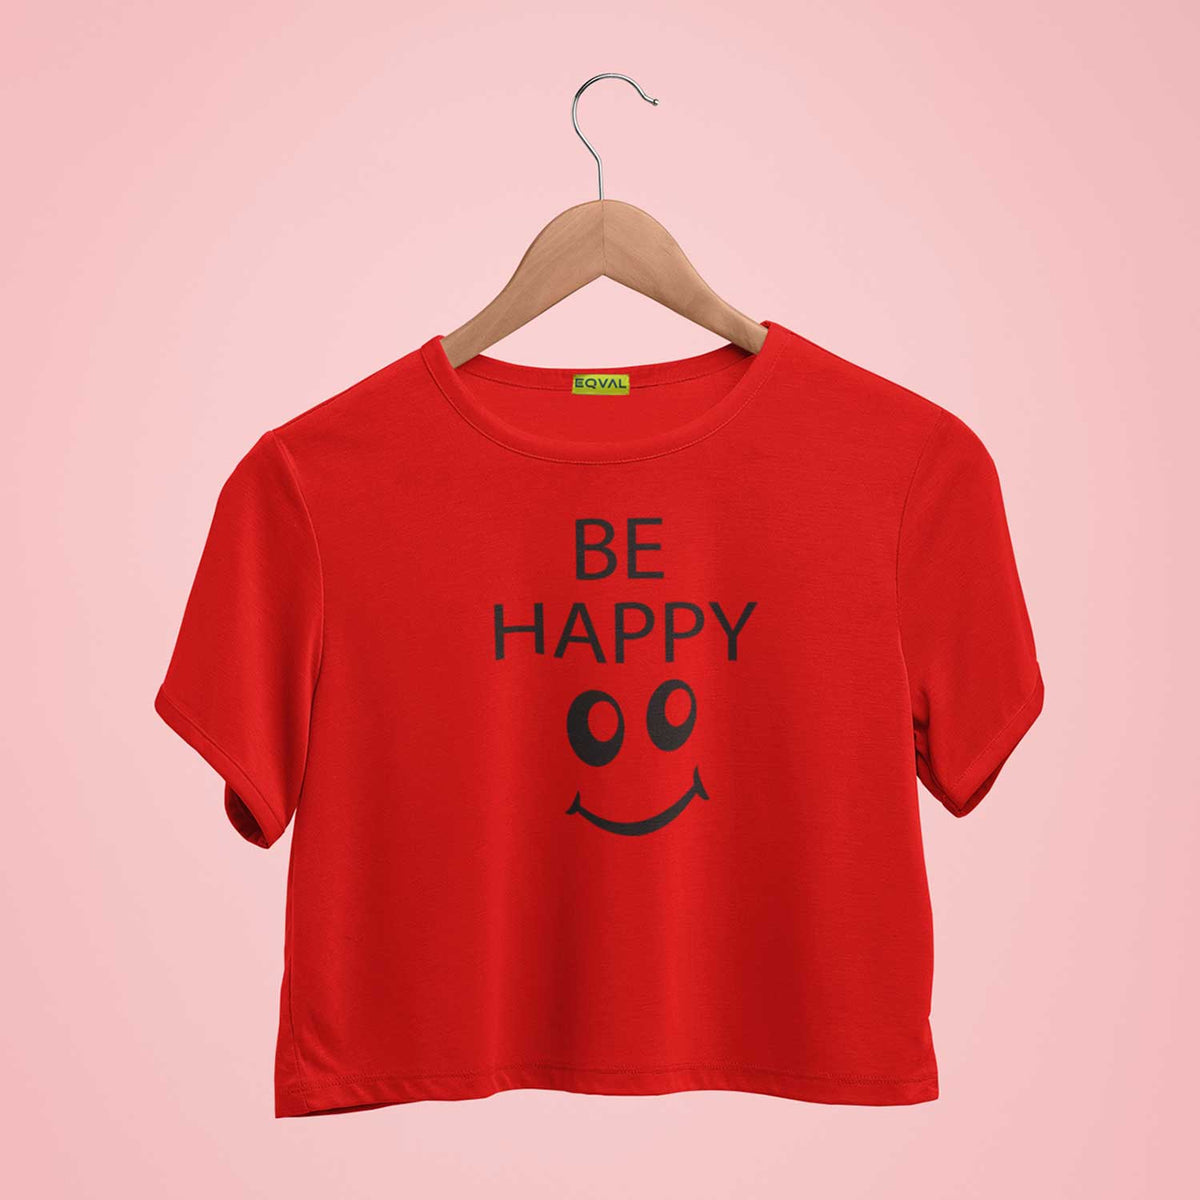 Be Happy Printed Crop Top T-shirt